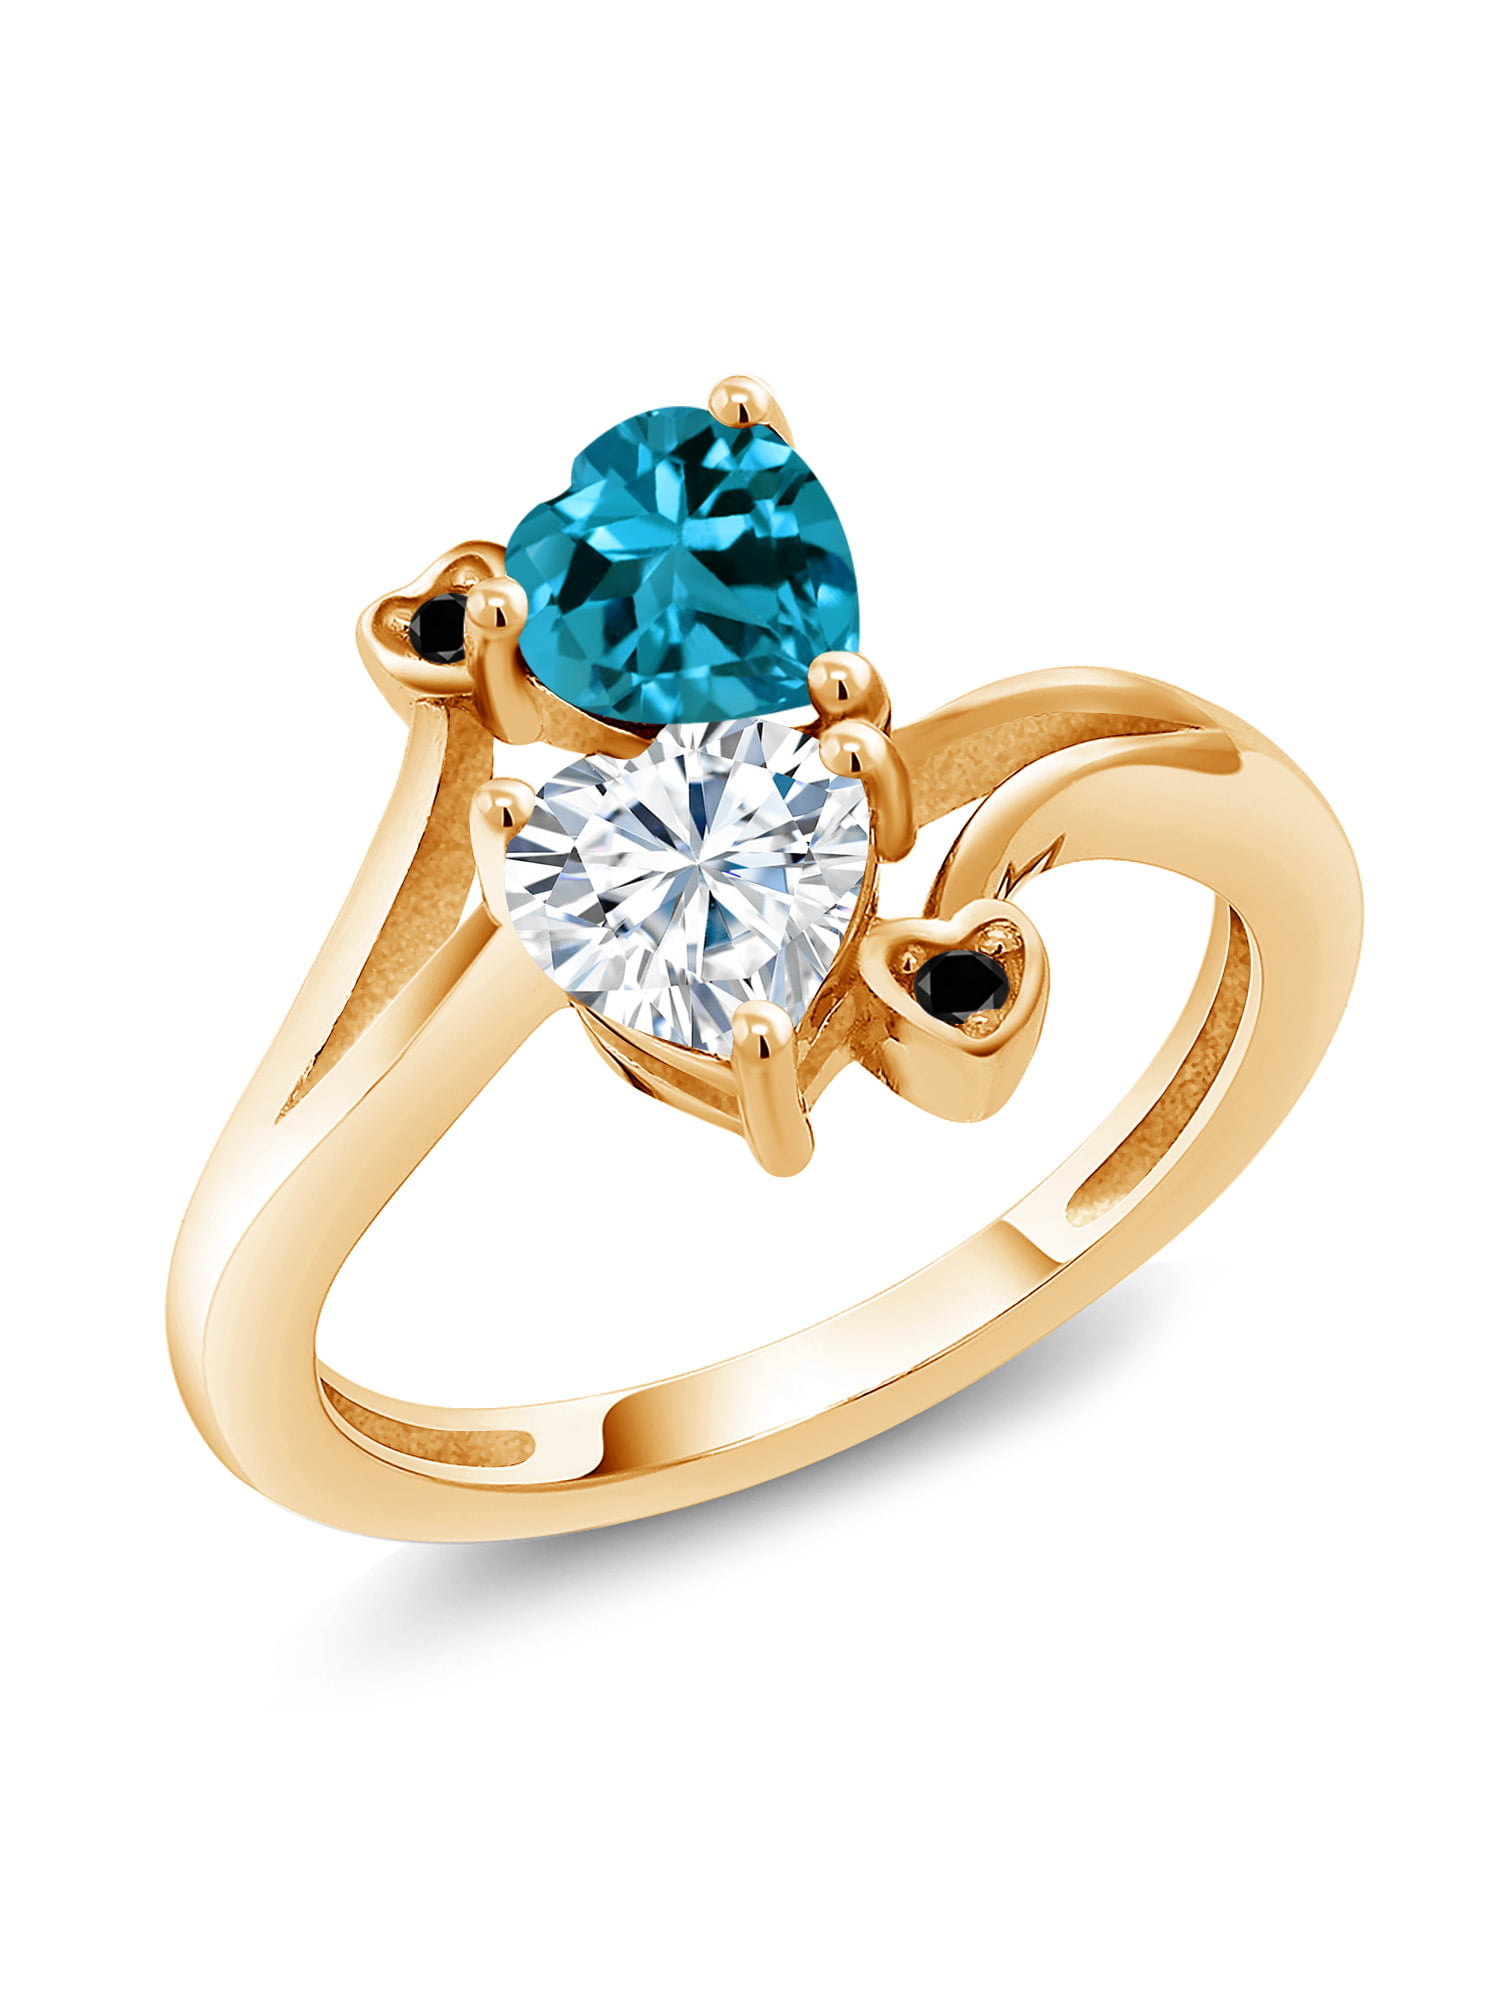 Details about   Natural 5MM London Blue Topaz Gemstone 925 Sterling Silver Cluster Wedding Ring 